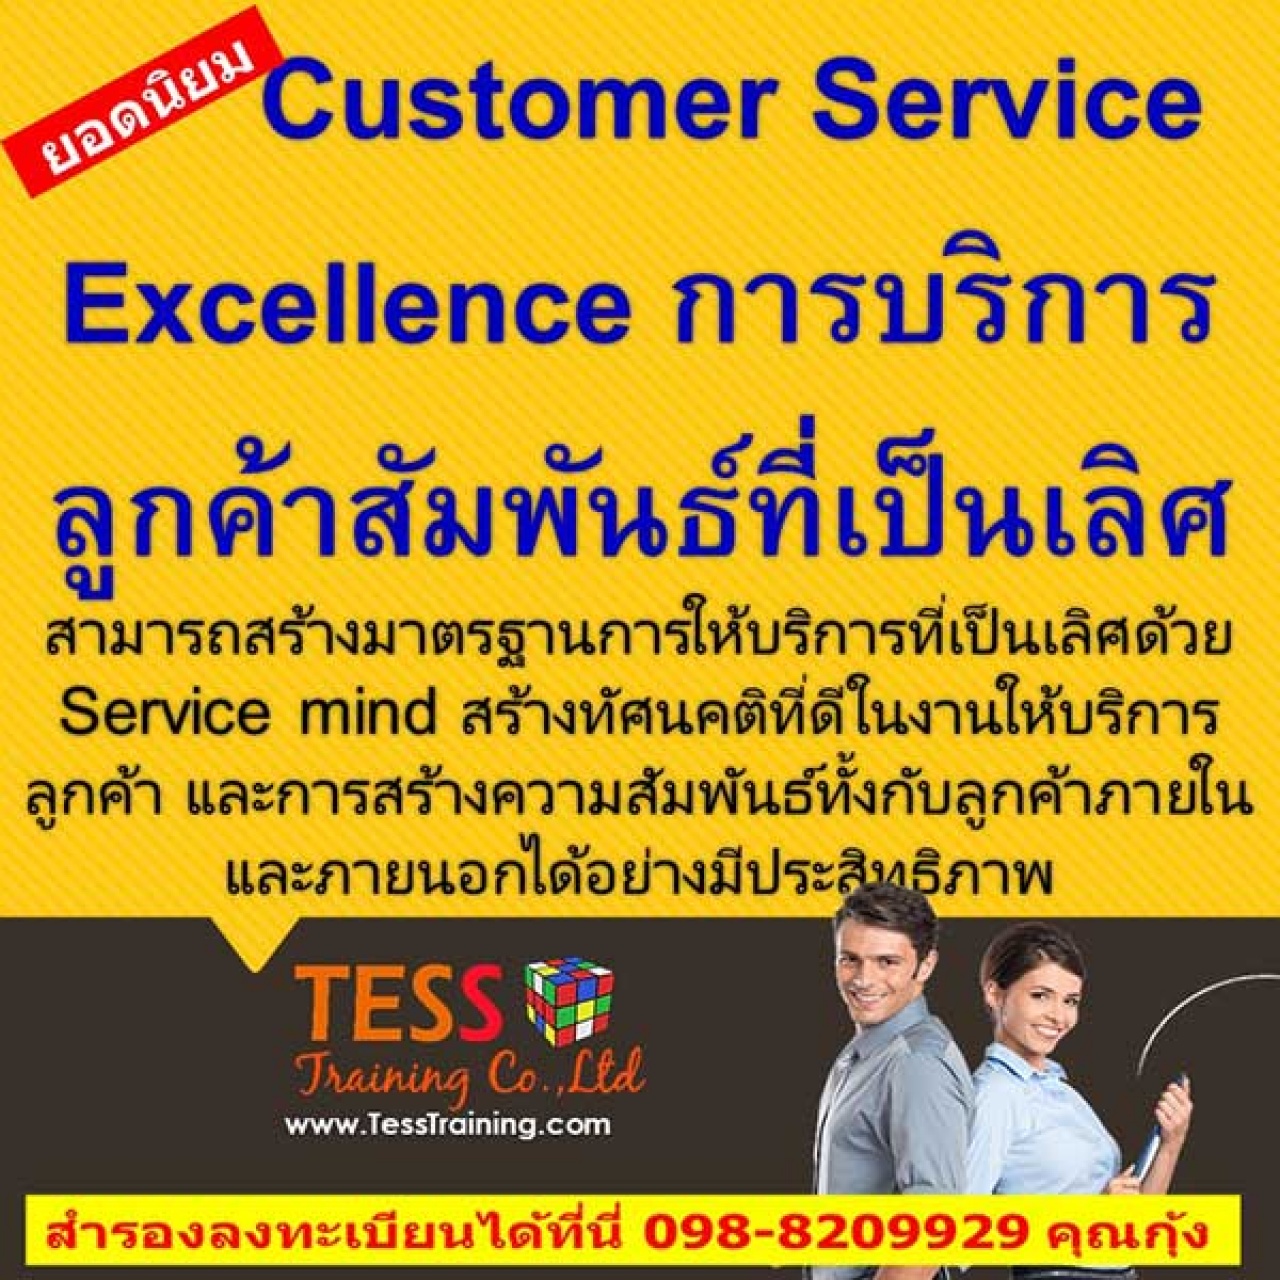 Customer Service Excellence การบริการลูกค้าสัมพันธ์ที่เป็นเลิศ (ุ30 ม.ค. 61) อ.ประเสริฐ